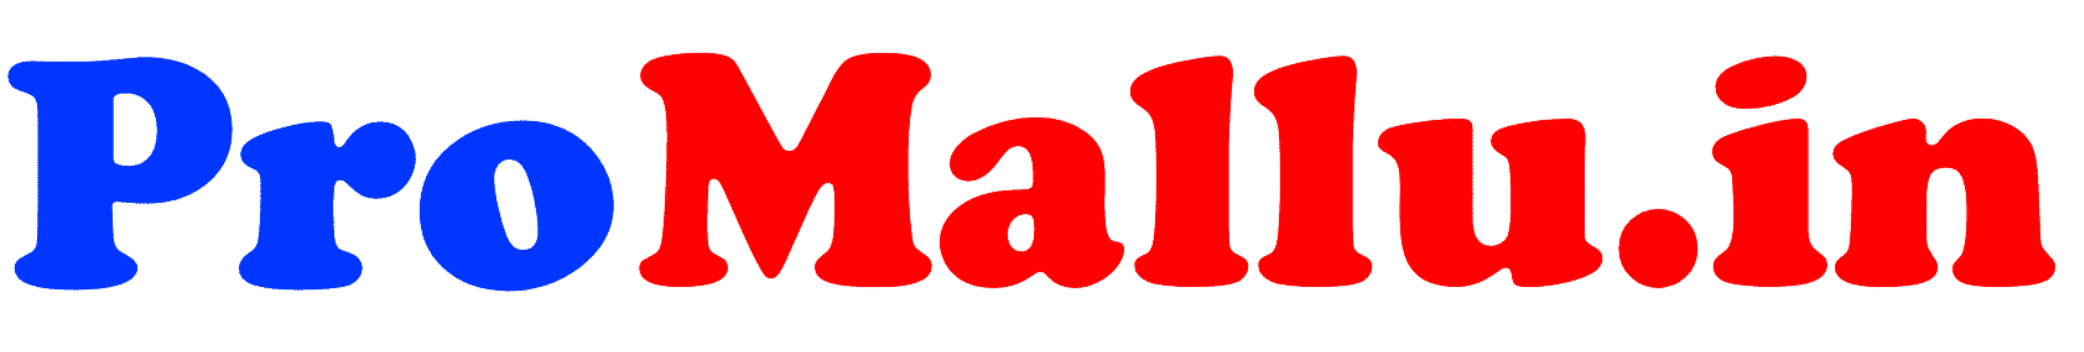 Promallu Logo